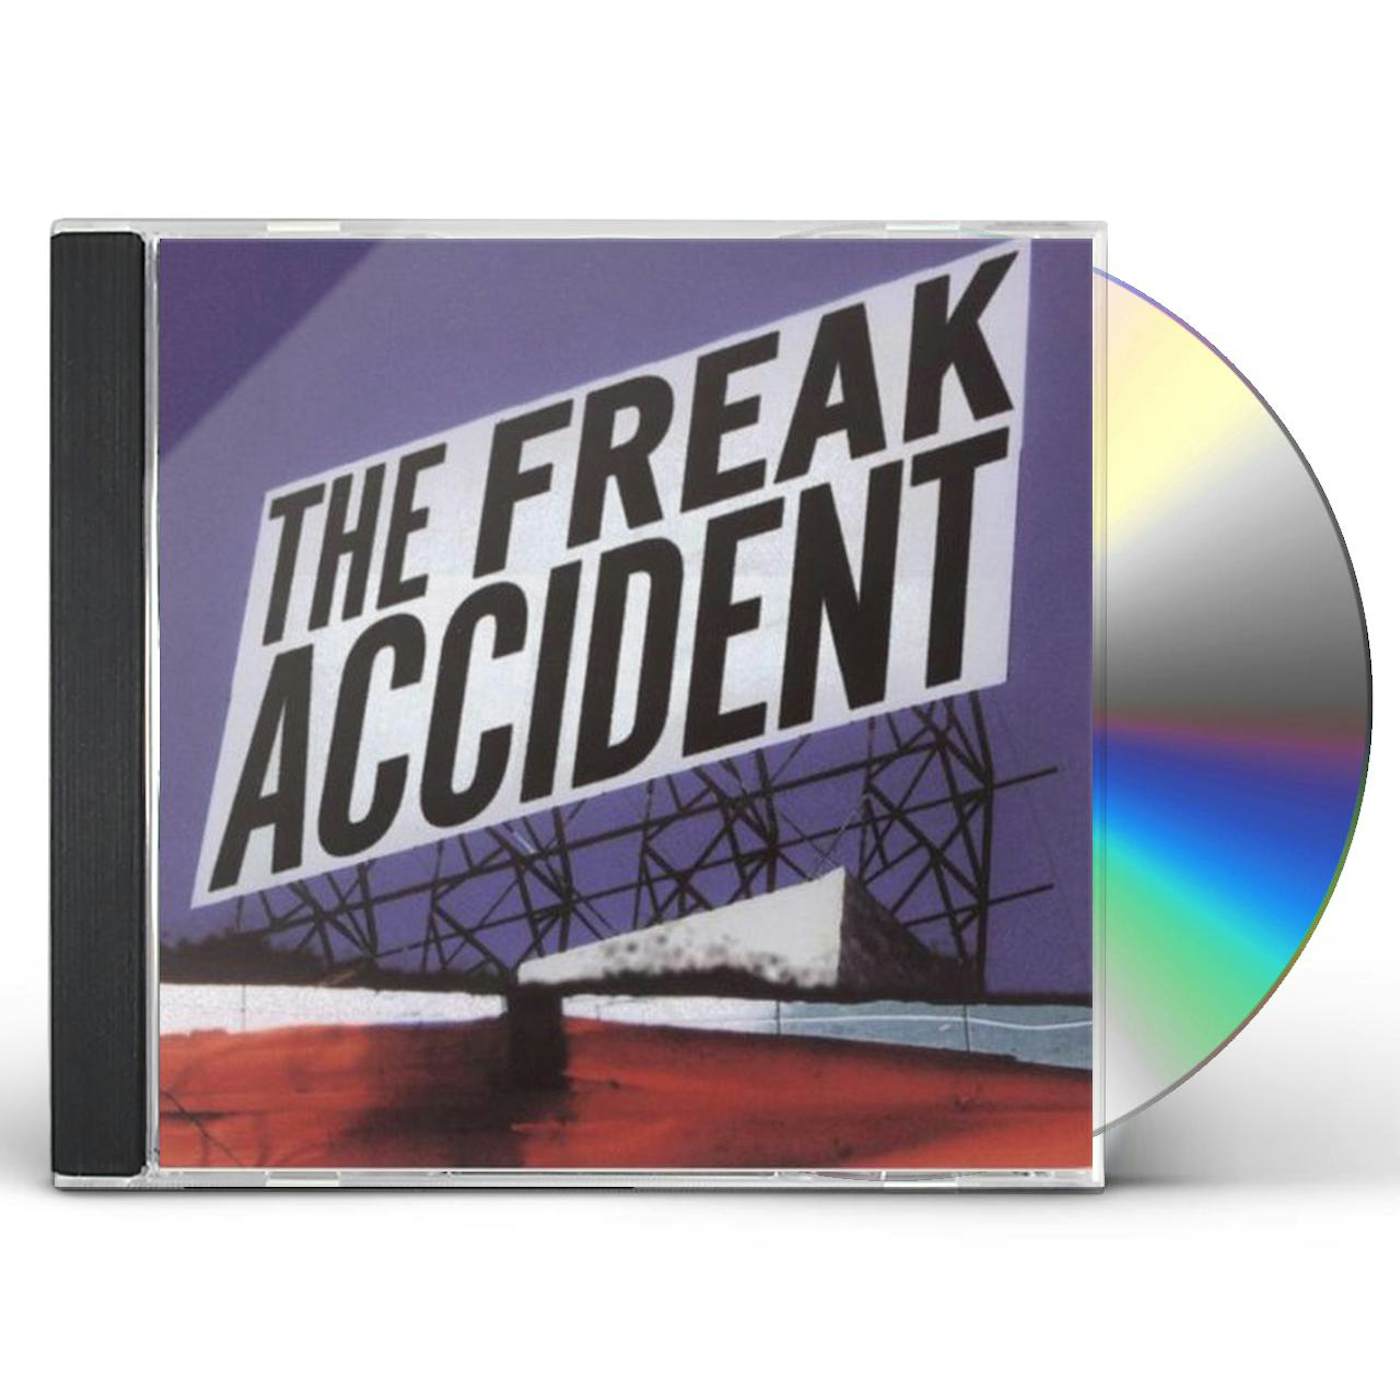 The Freak Accident CD